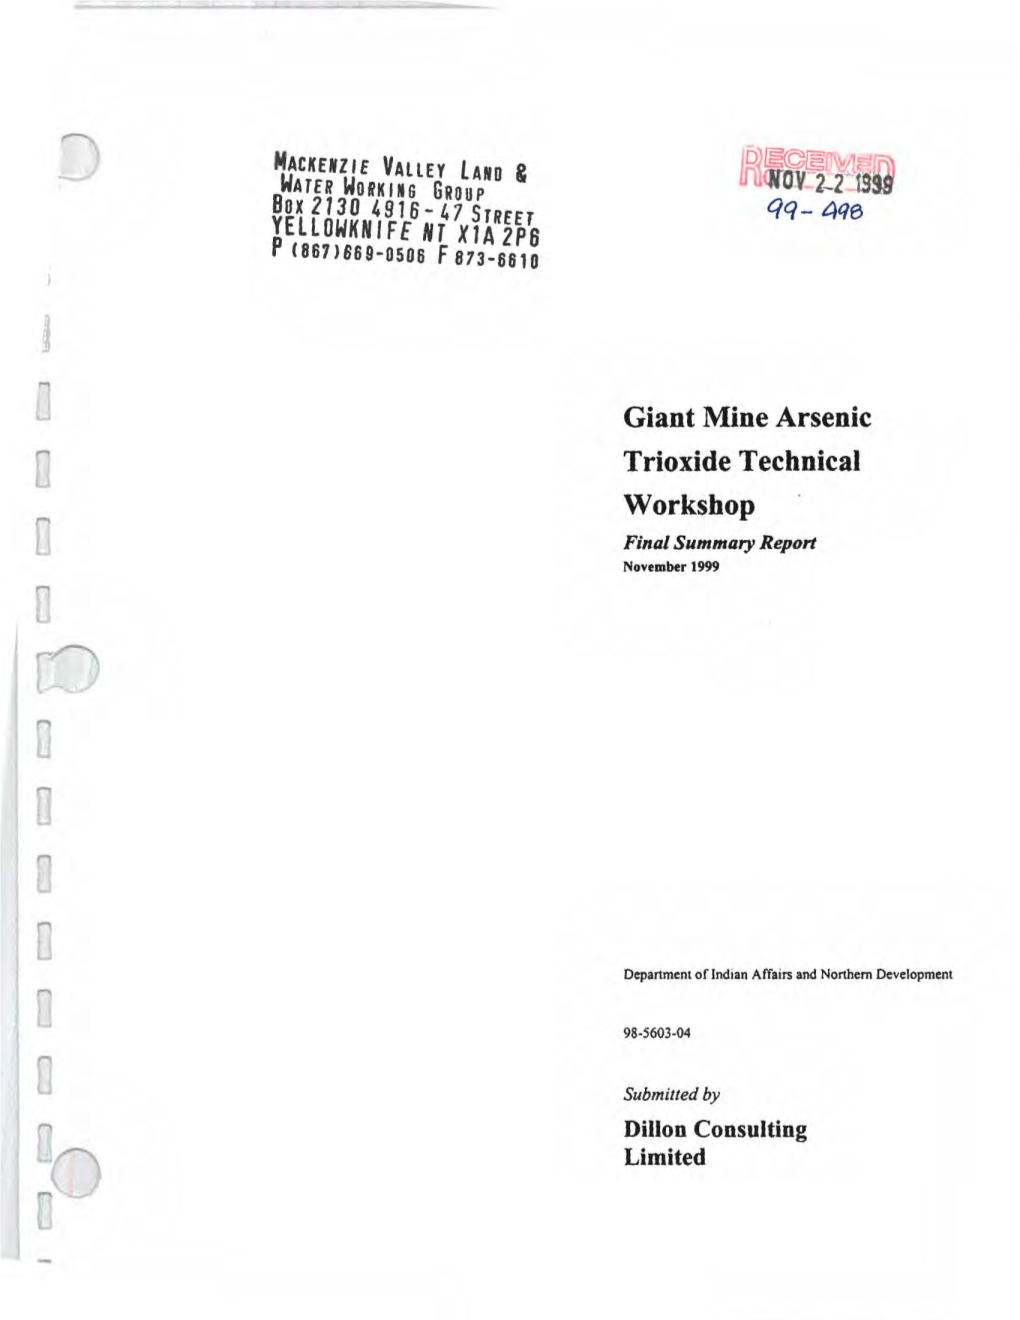 Giant Mine Arsenic Trioxide Technical Workshop Final Summary Report November 1999